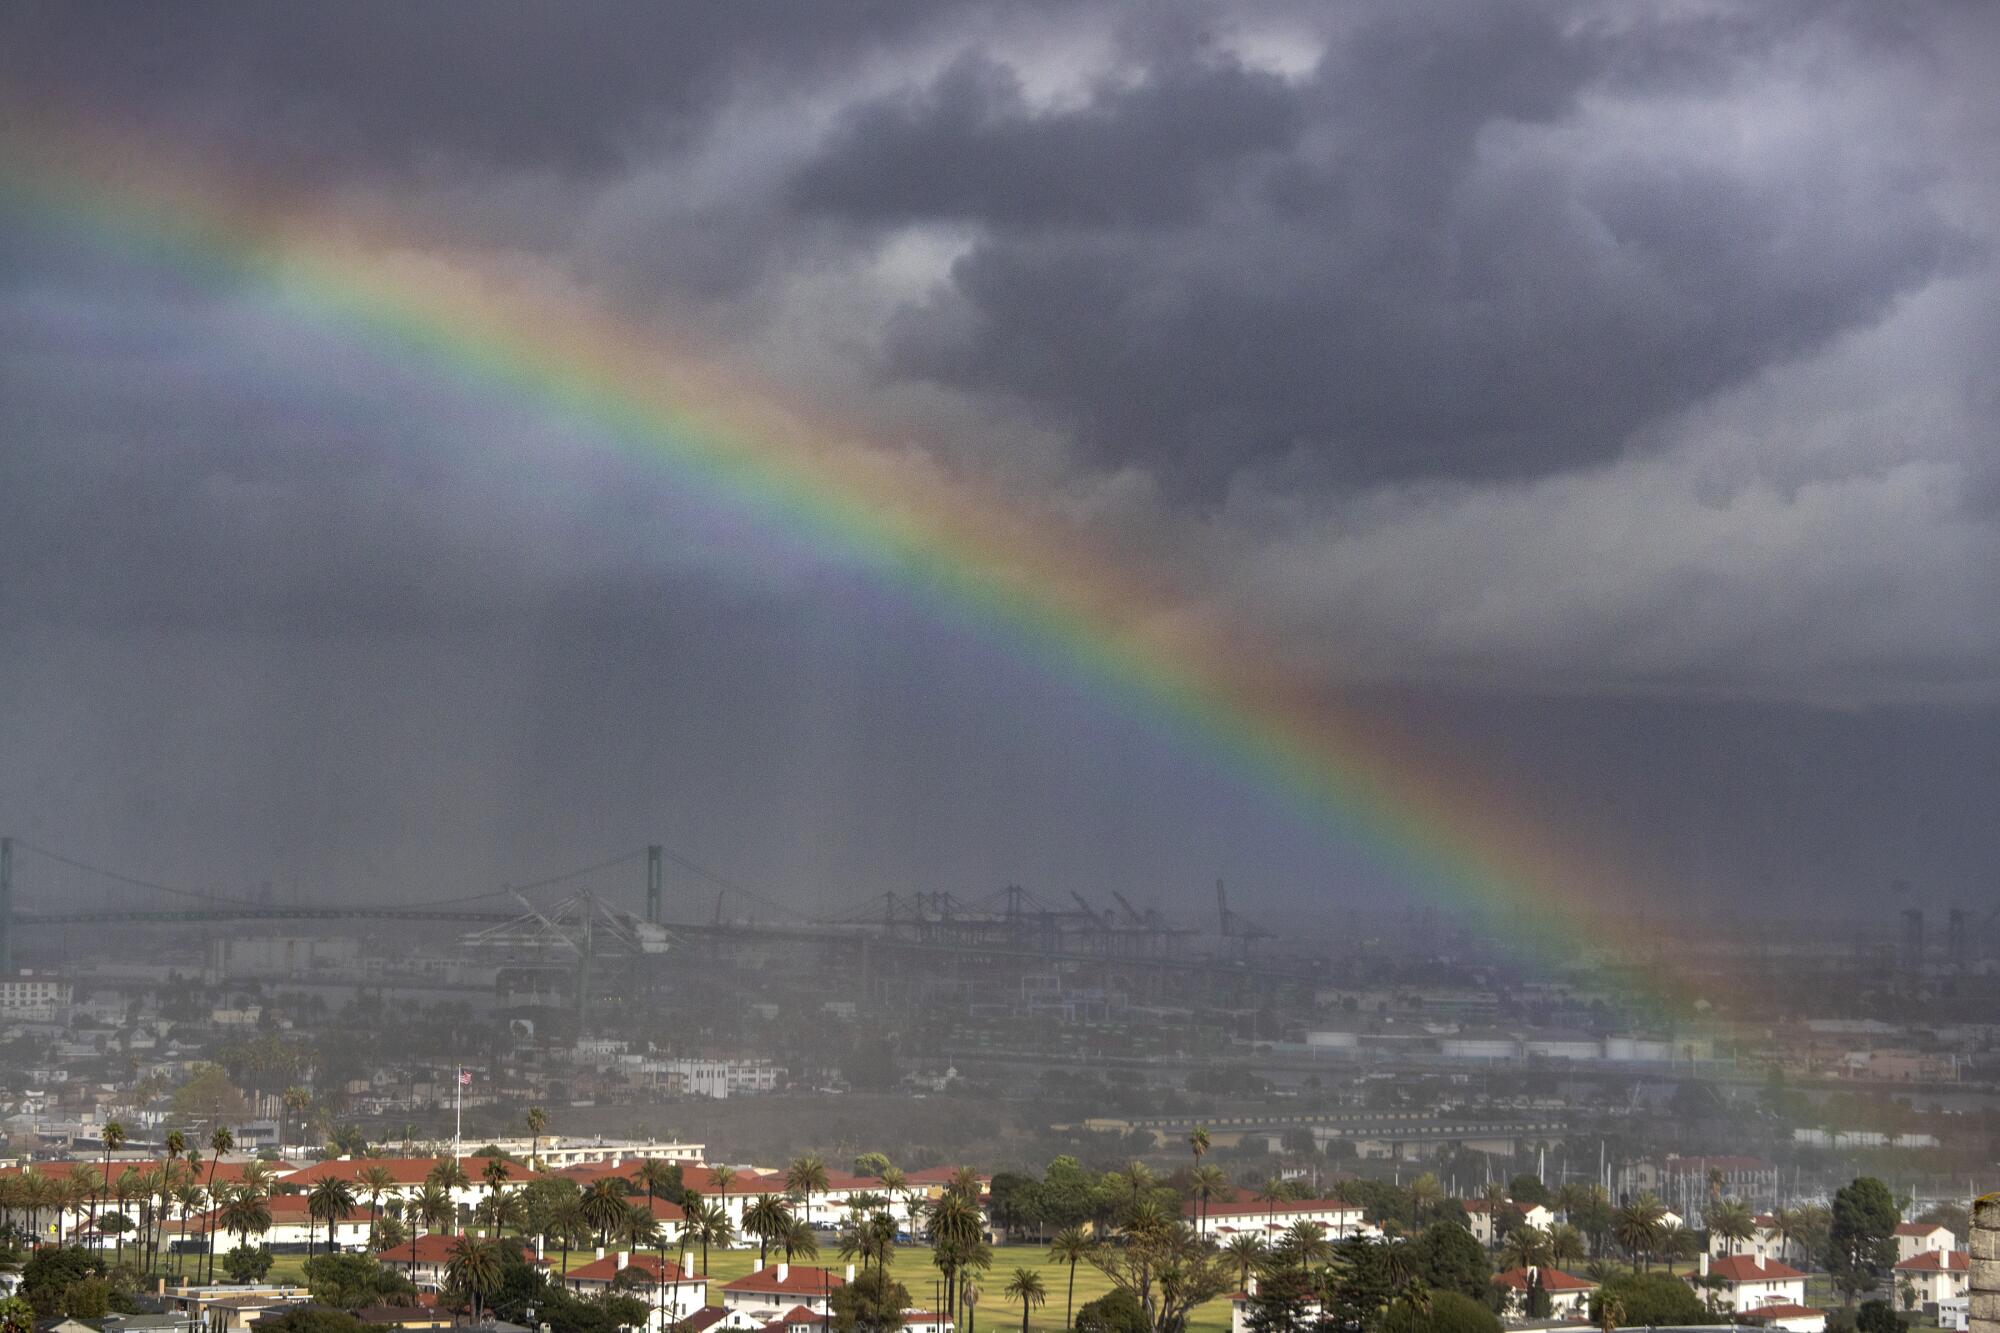 A rainbow appears amid pouring rain over a port.